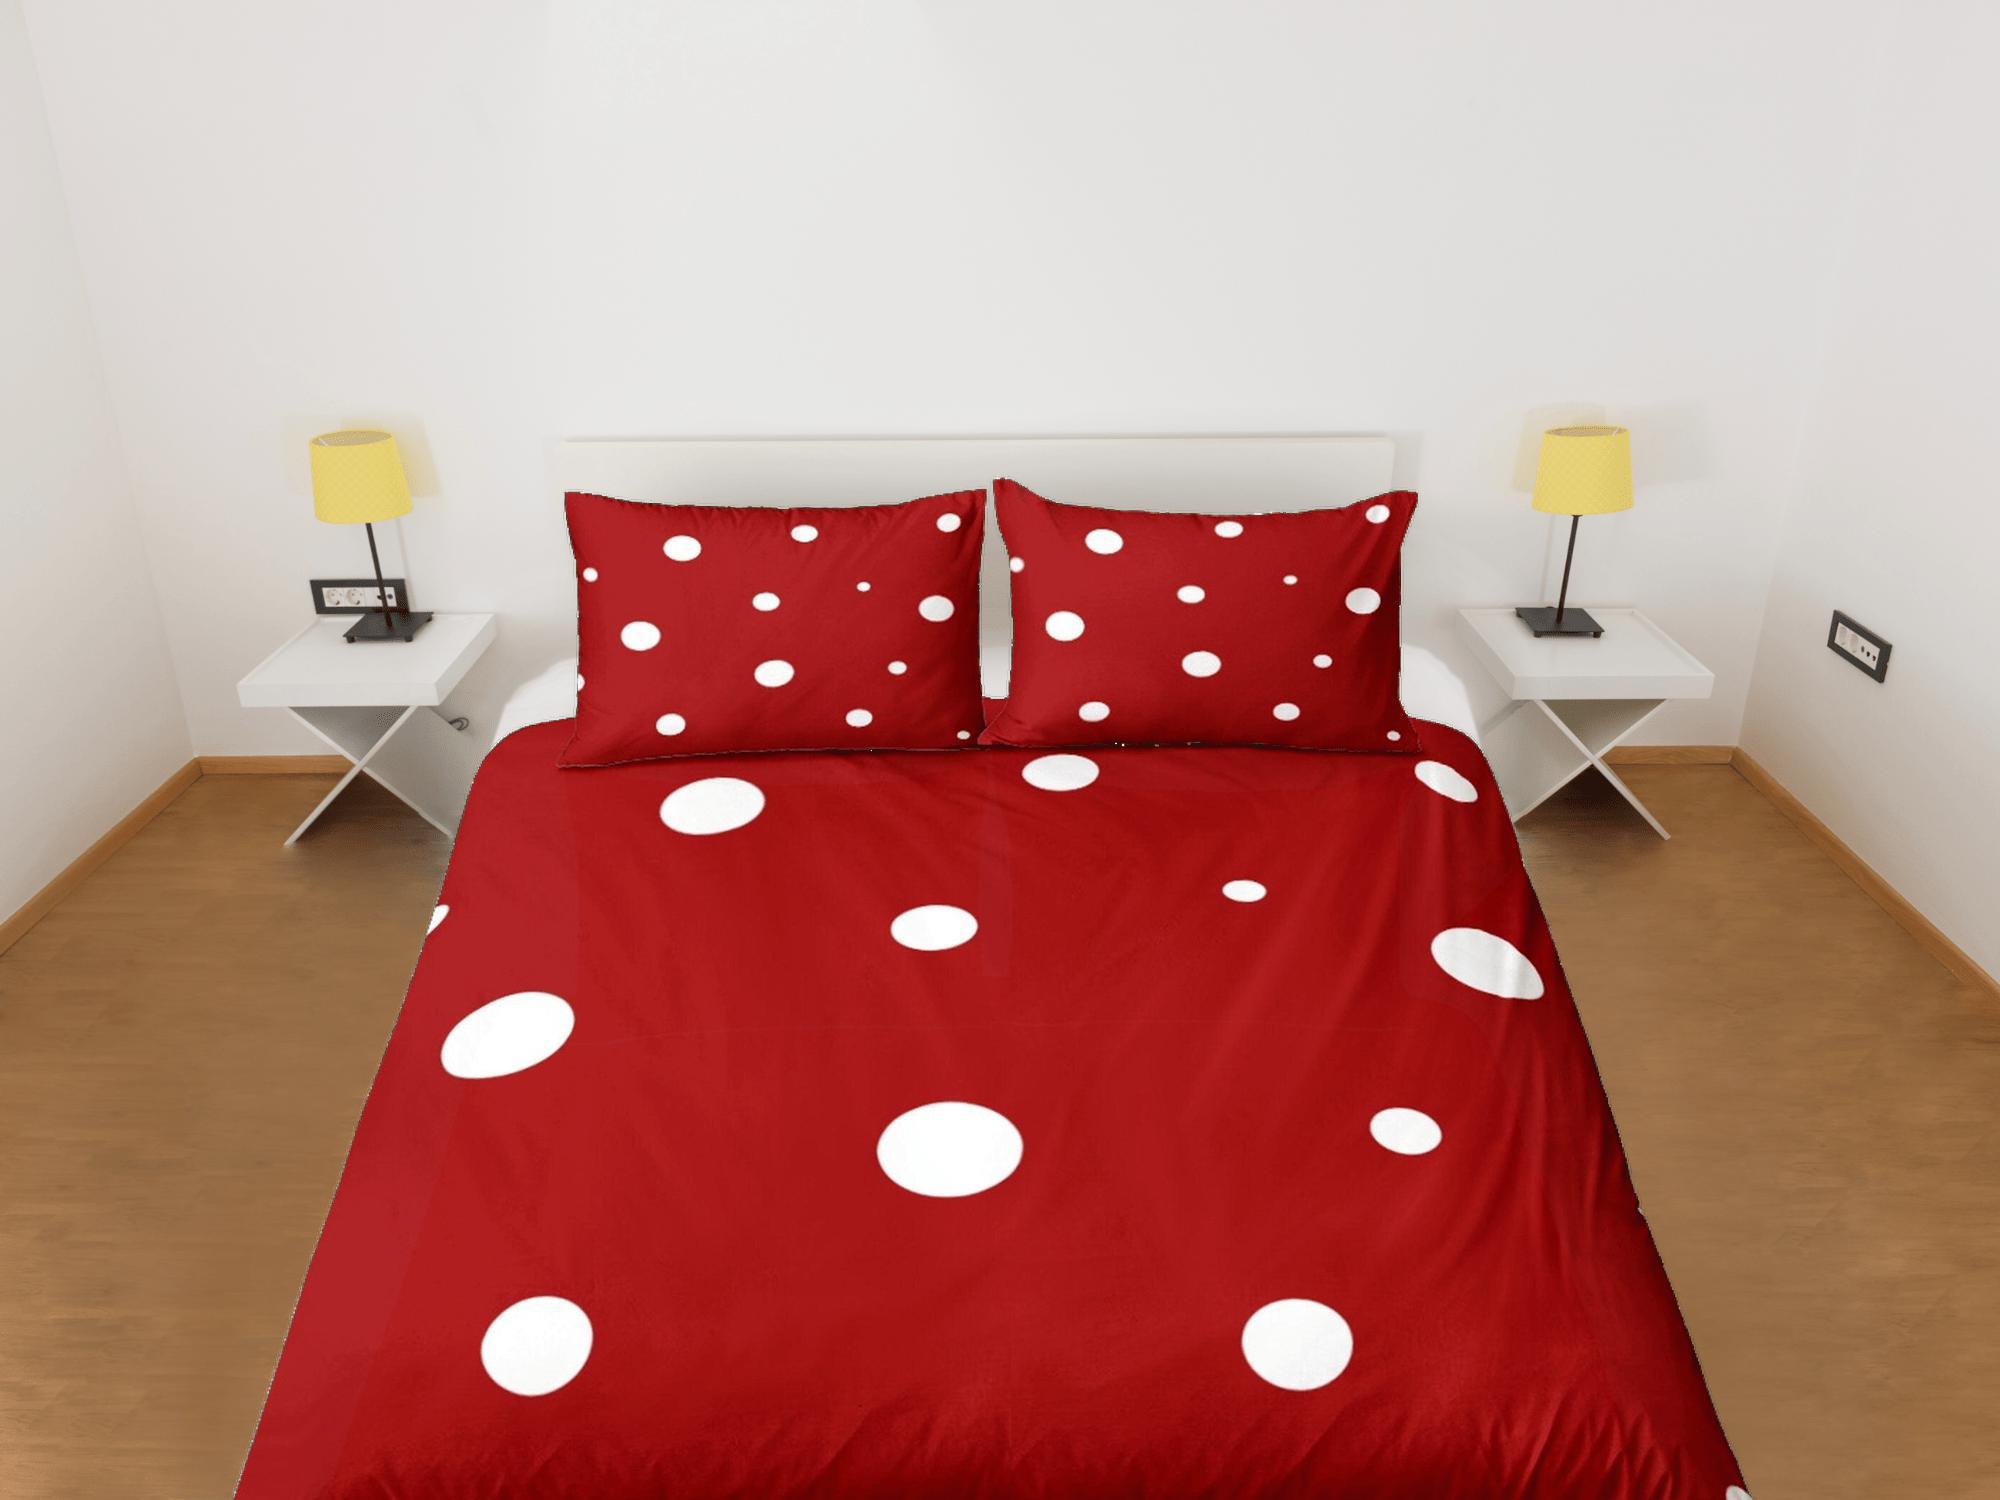 daintyduvet Red Duvet Cover Set Bedspread, Dorm Bedding with Pillowcase